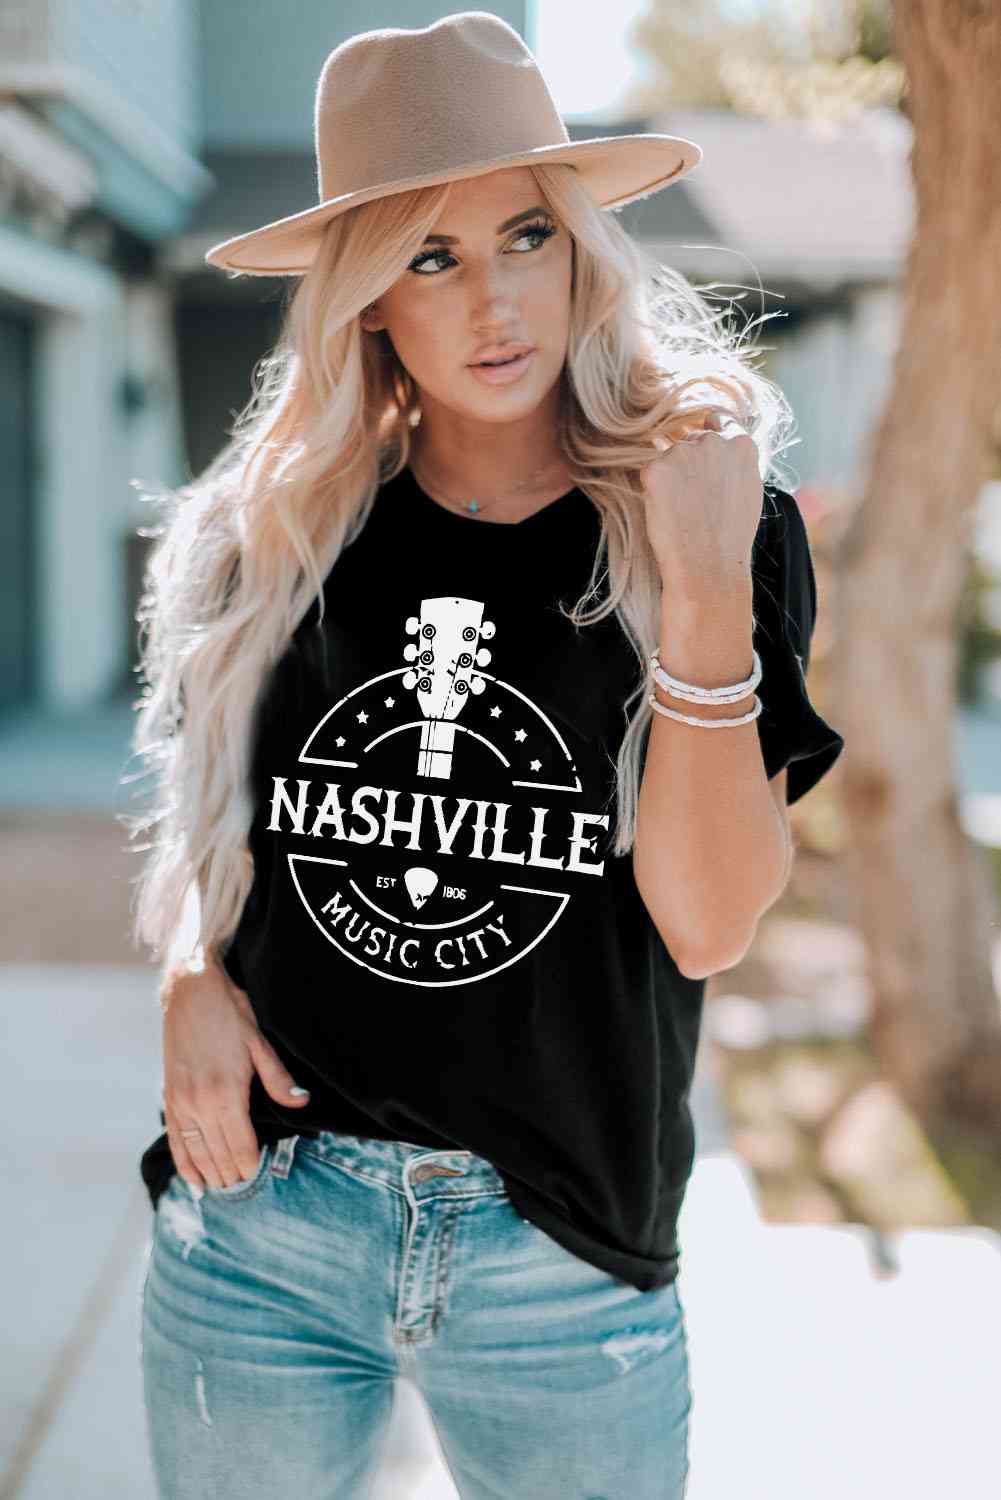 Western NASHVILLE MUSIC CITY Cuffed Graphic Tee Shirt Shirts & Tops Krazy Heart Designs Boutique   